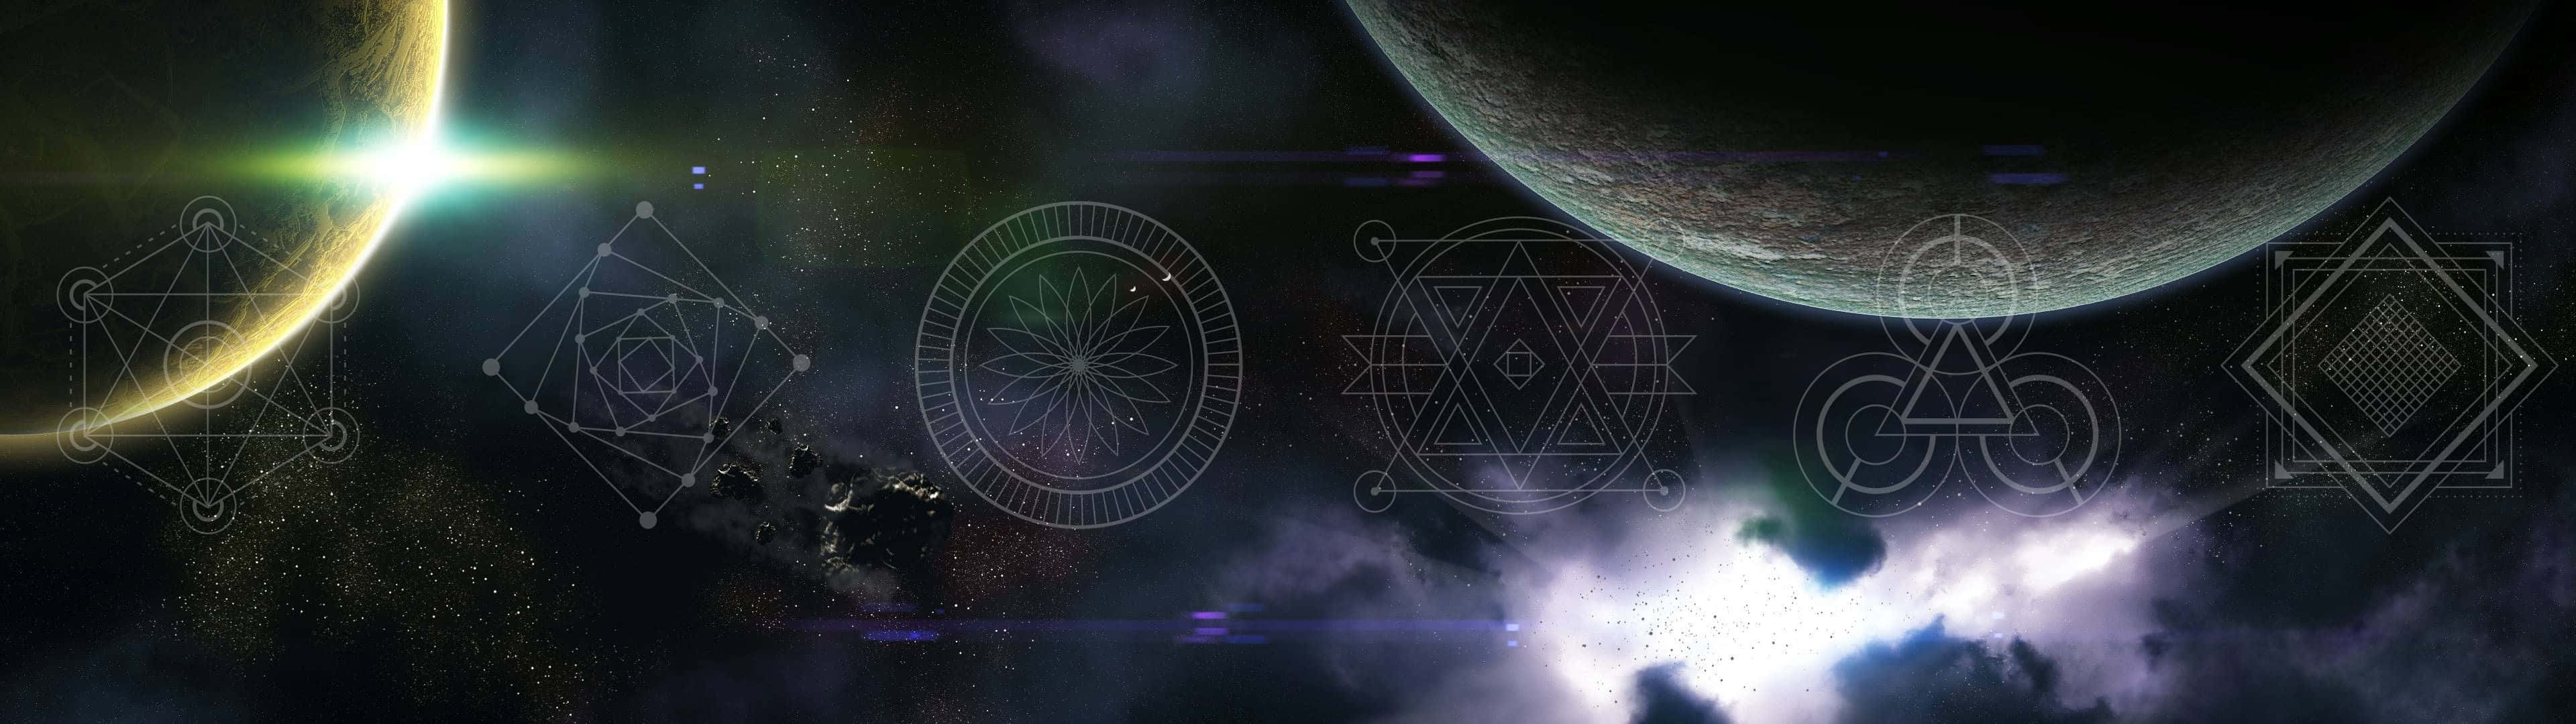 Mystical Sacred Geometry Design Wallpaper